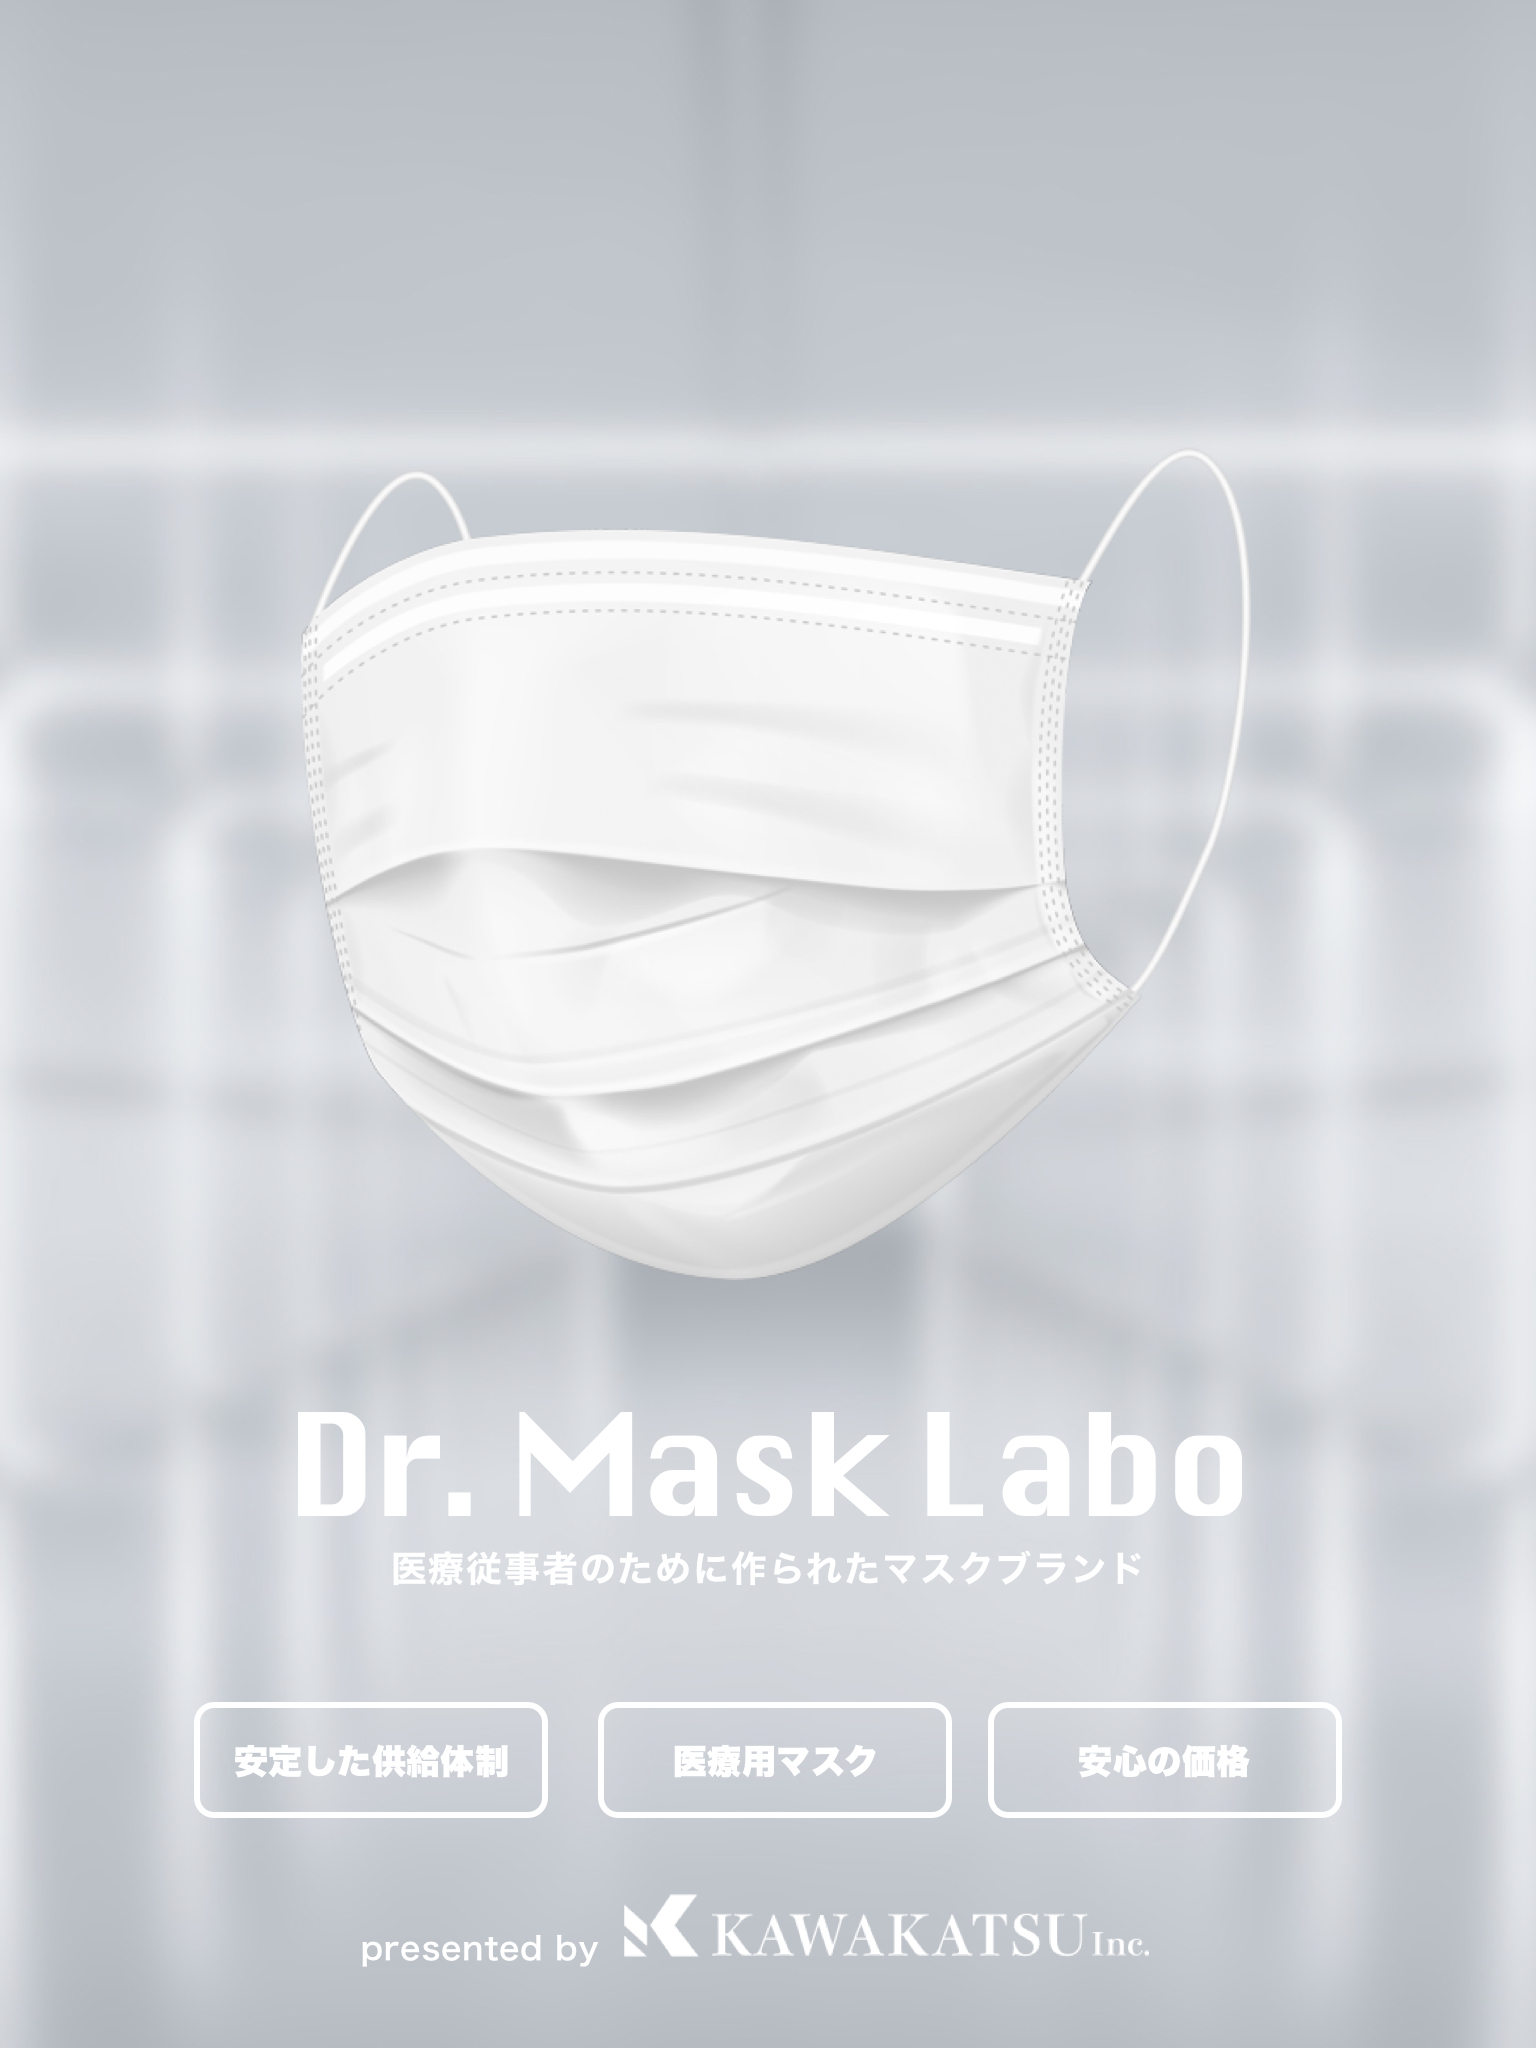 Dr Mask Labo ドクターマスクラボ 医療従事者のために作られたマスクブランド